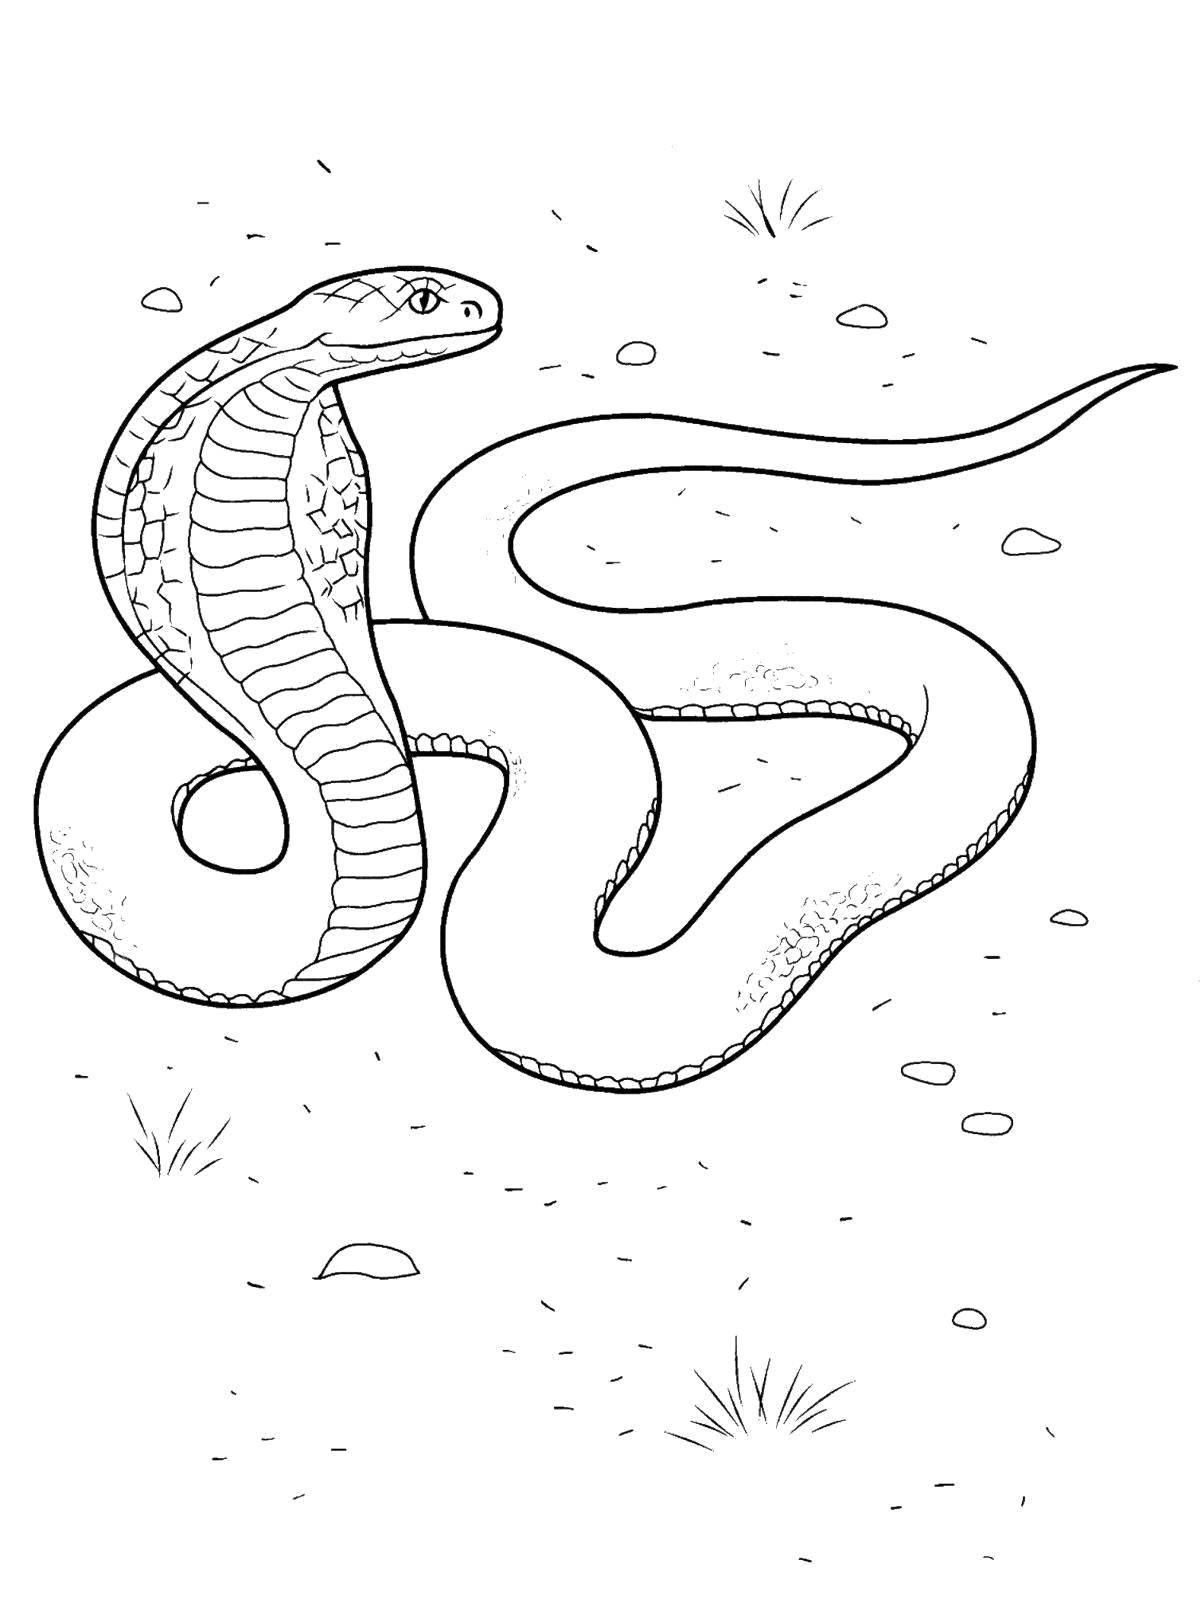 Название: Раскраска Кобра. Категория: рептилии. Теги: Рептилия, змея.